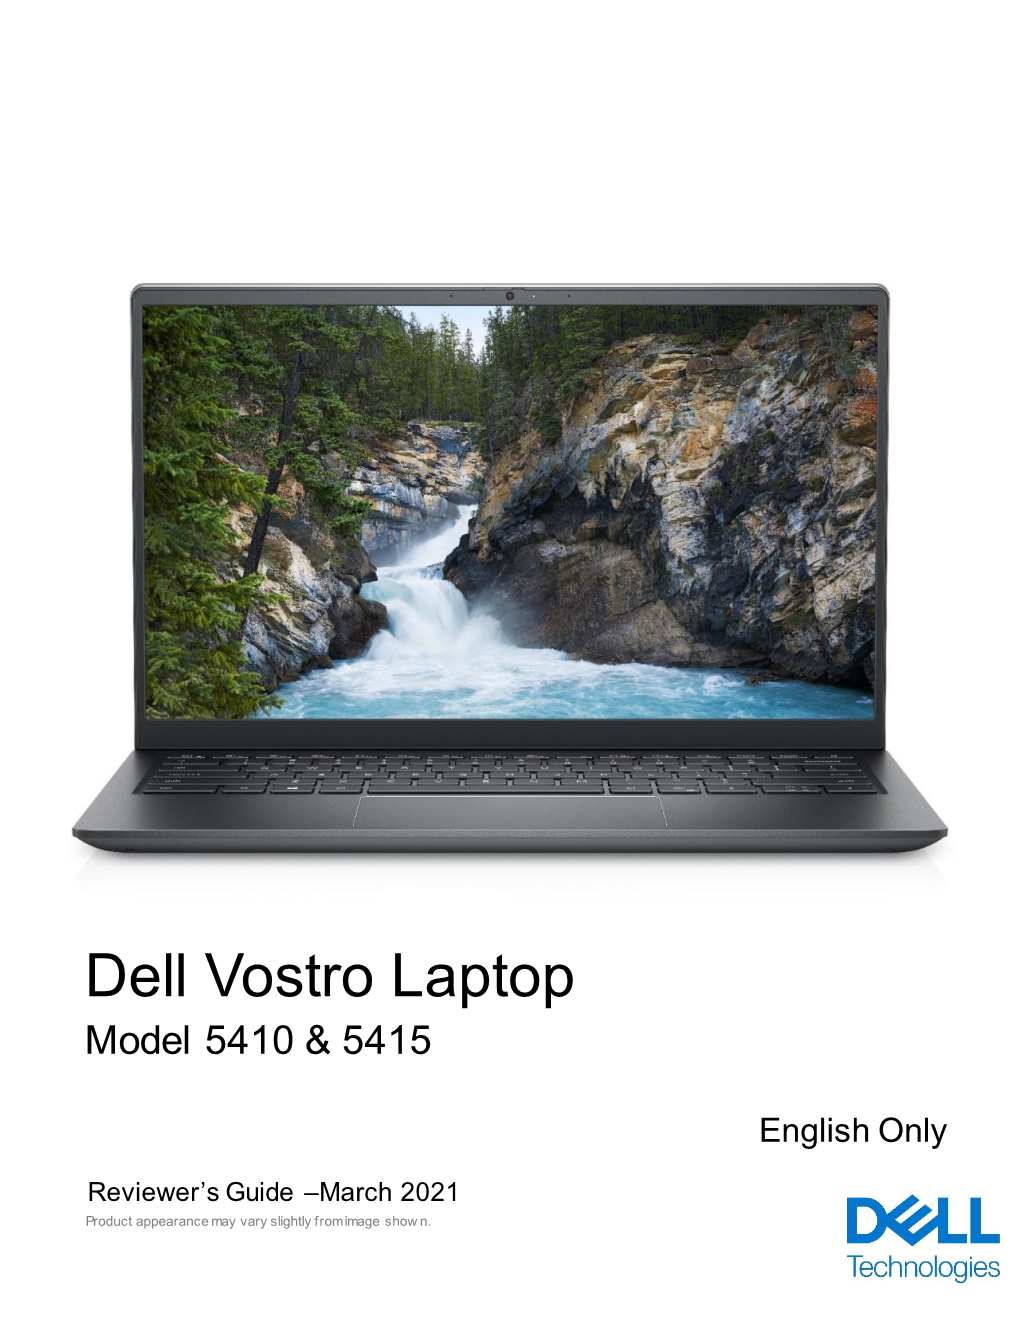 Dell Vostro Laptop Model 5410 & 5415